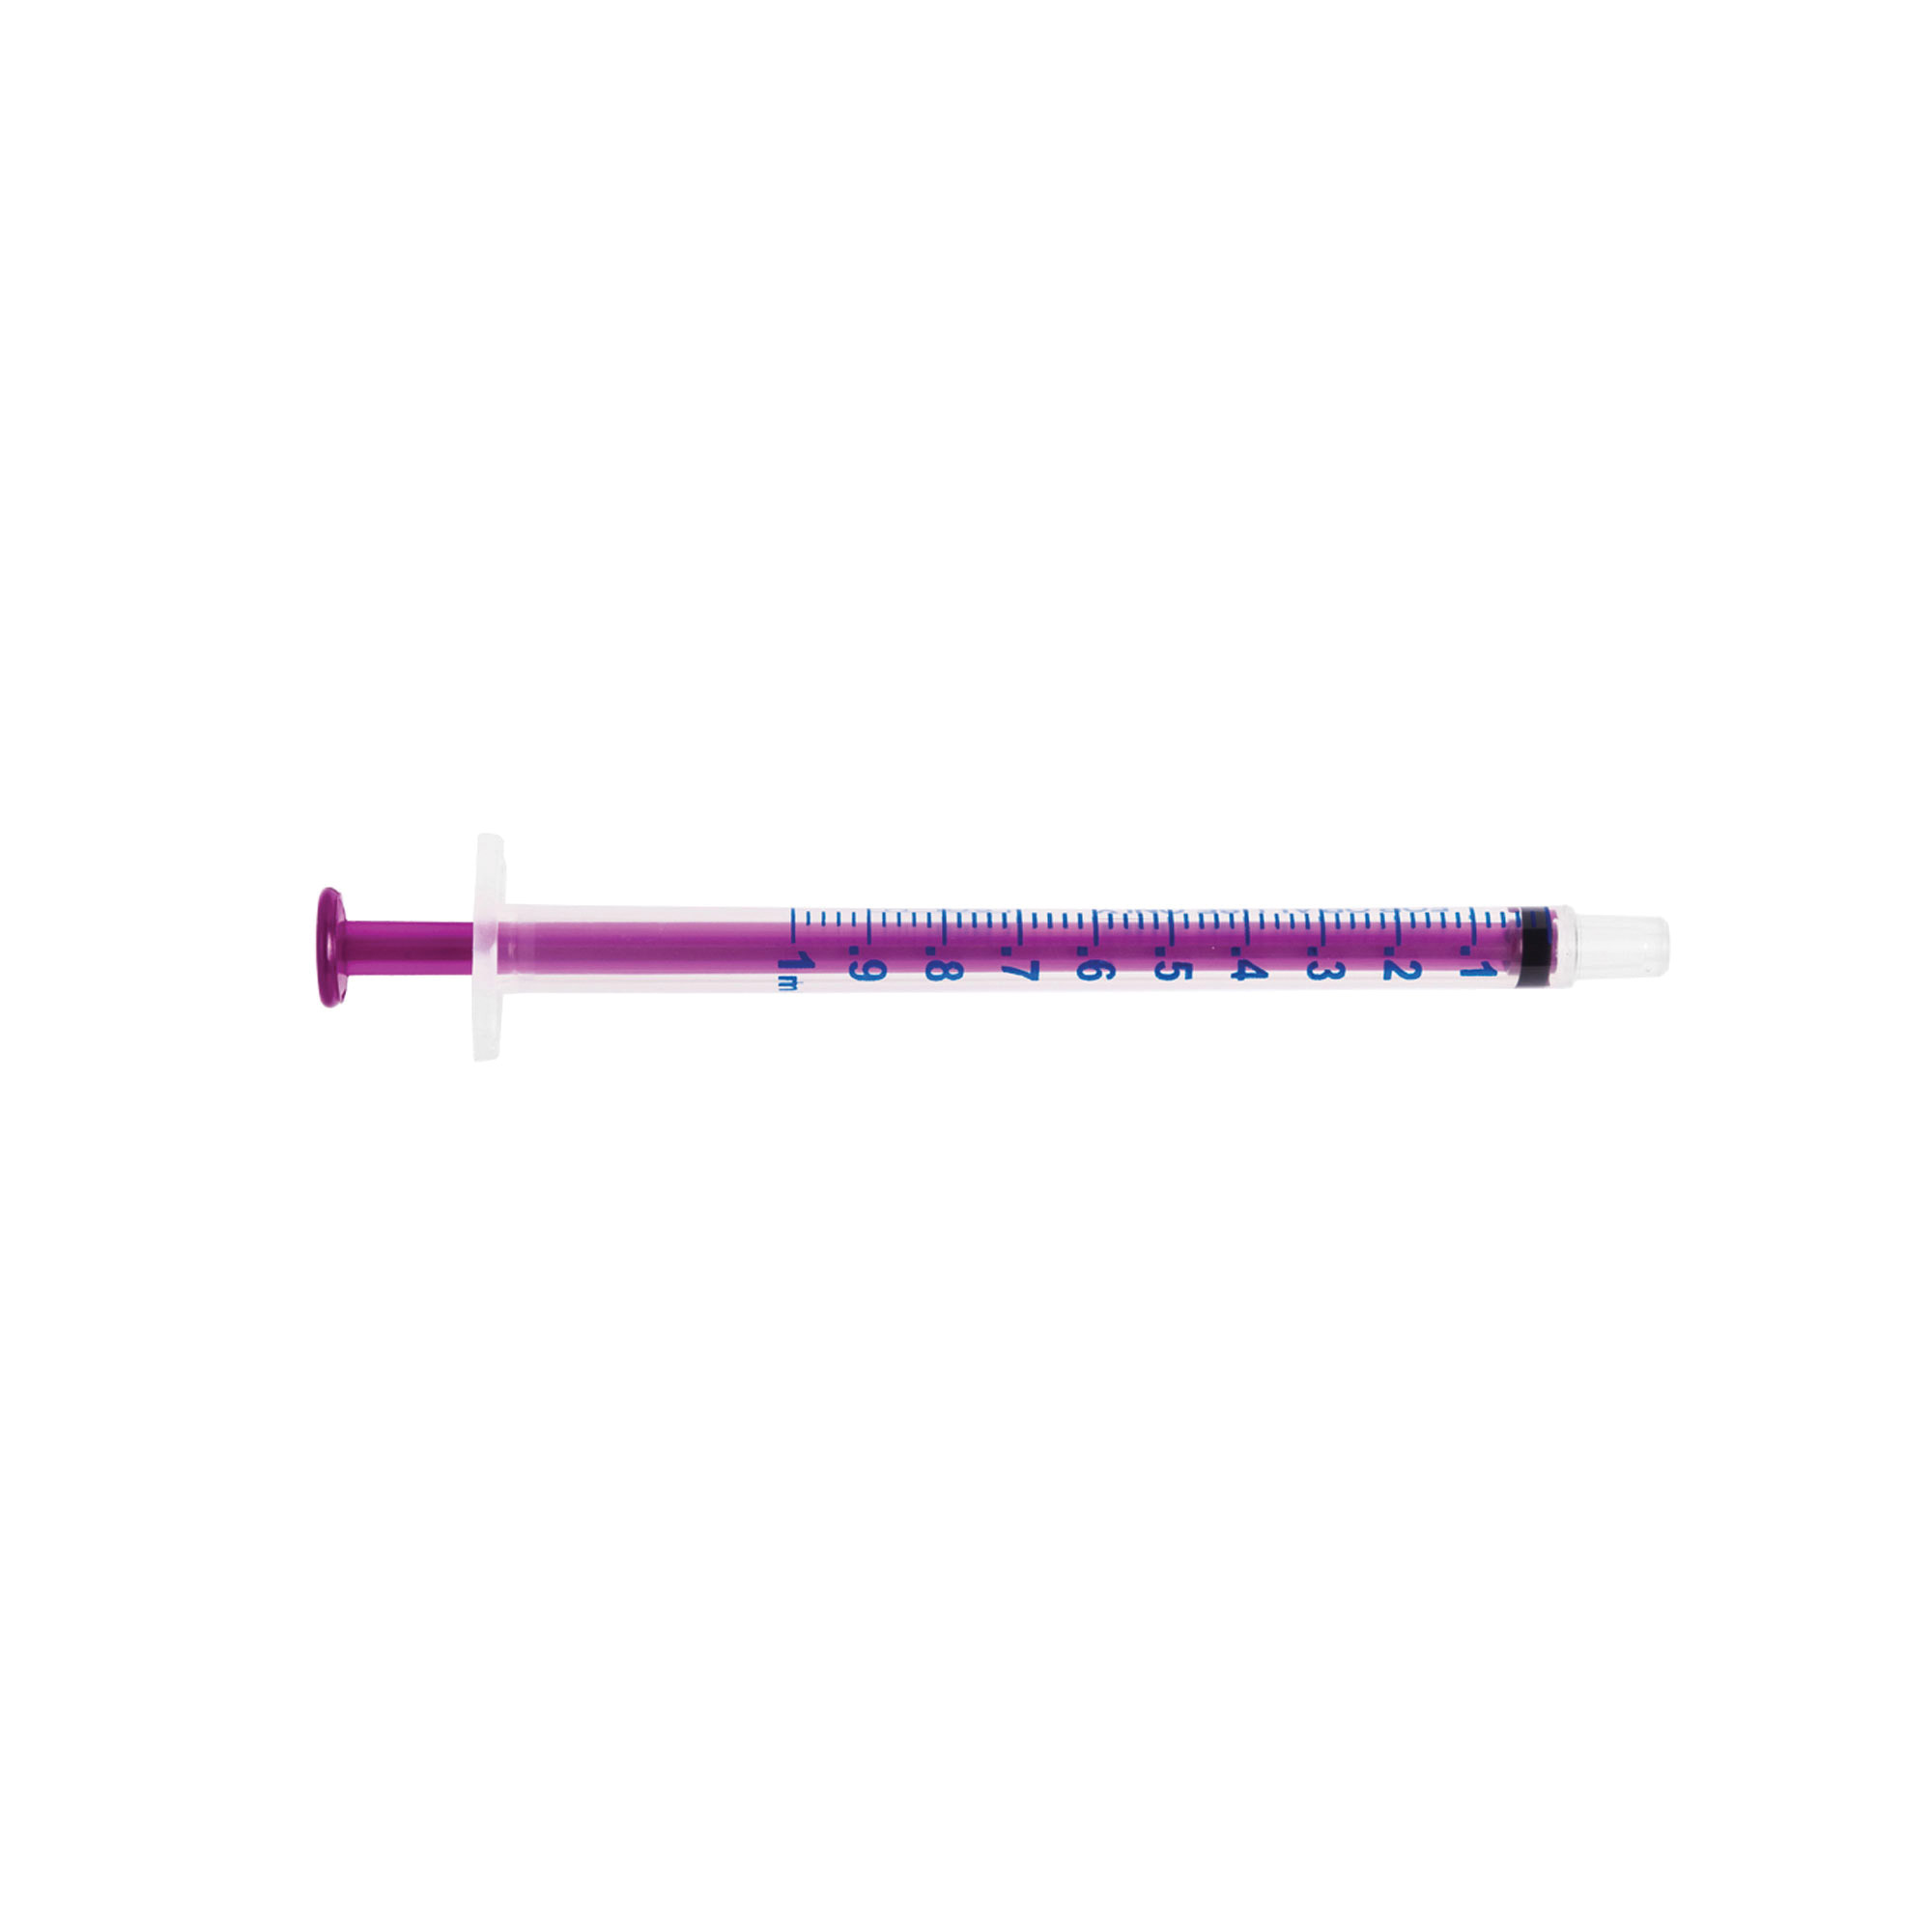 SOL - M Oral syringe (purple plunger) 3ml